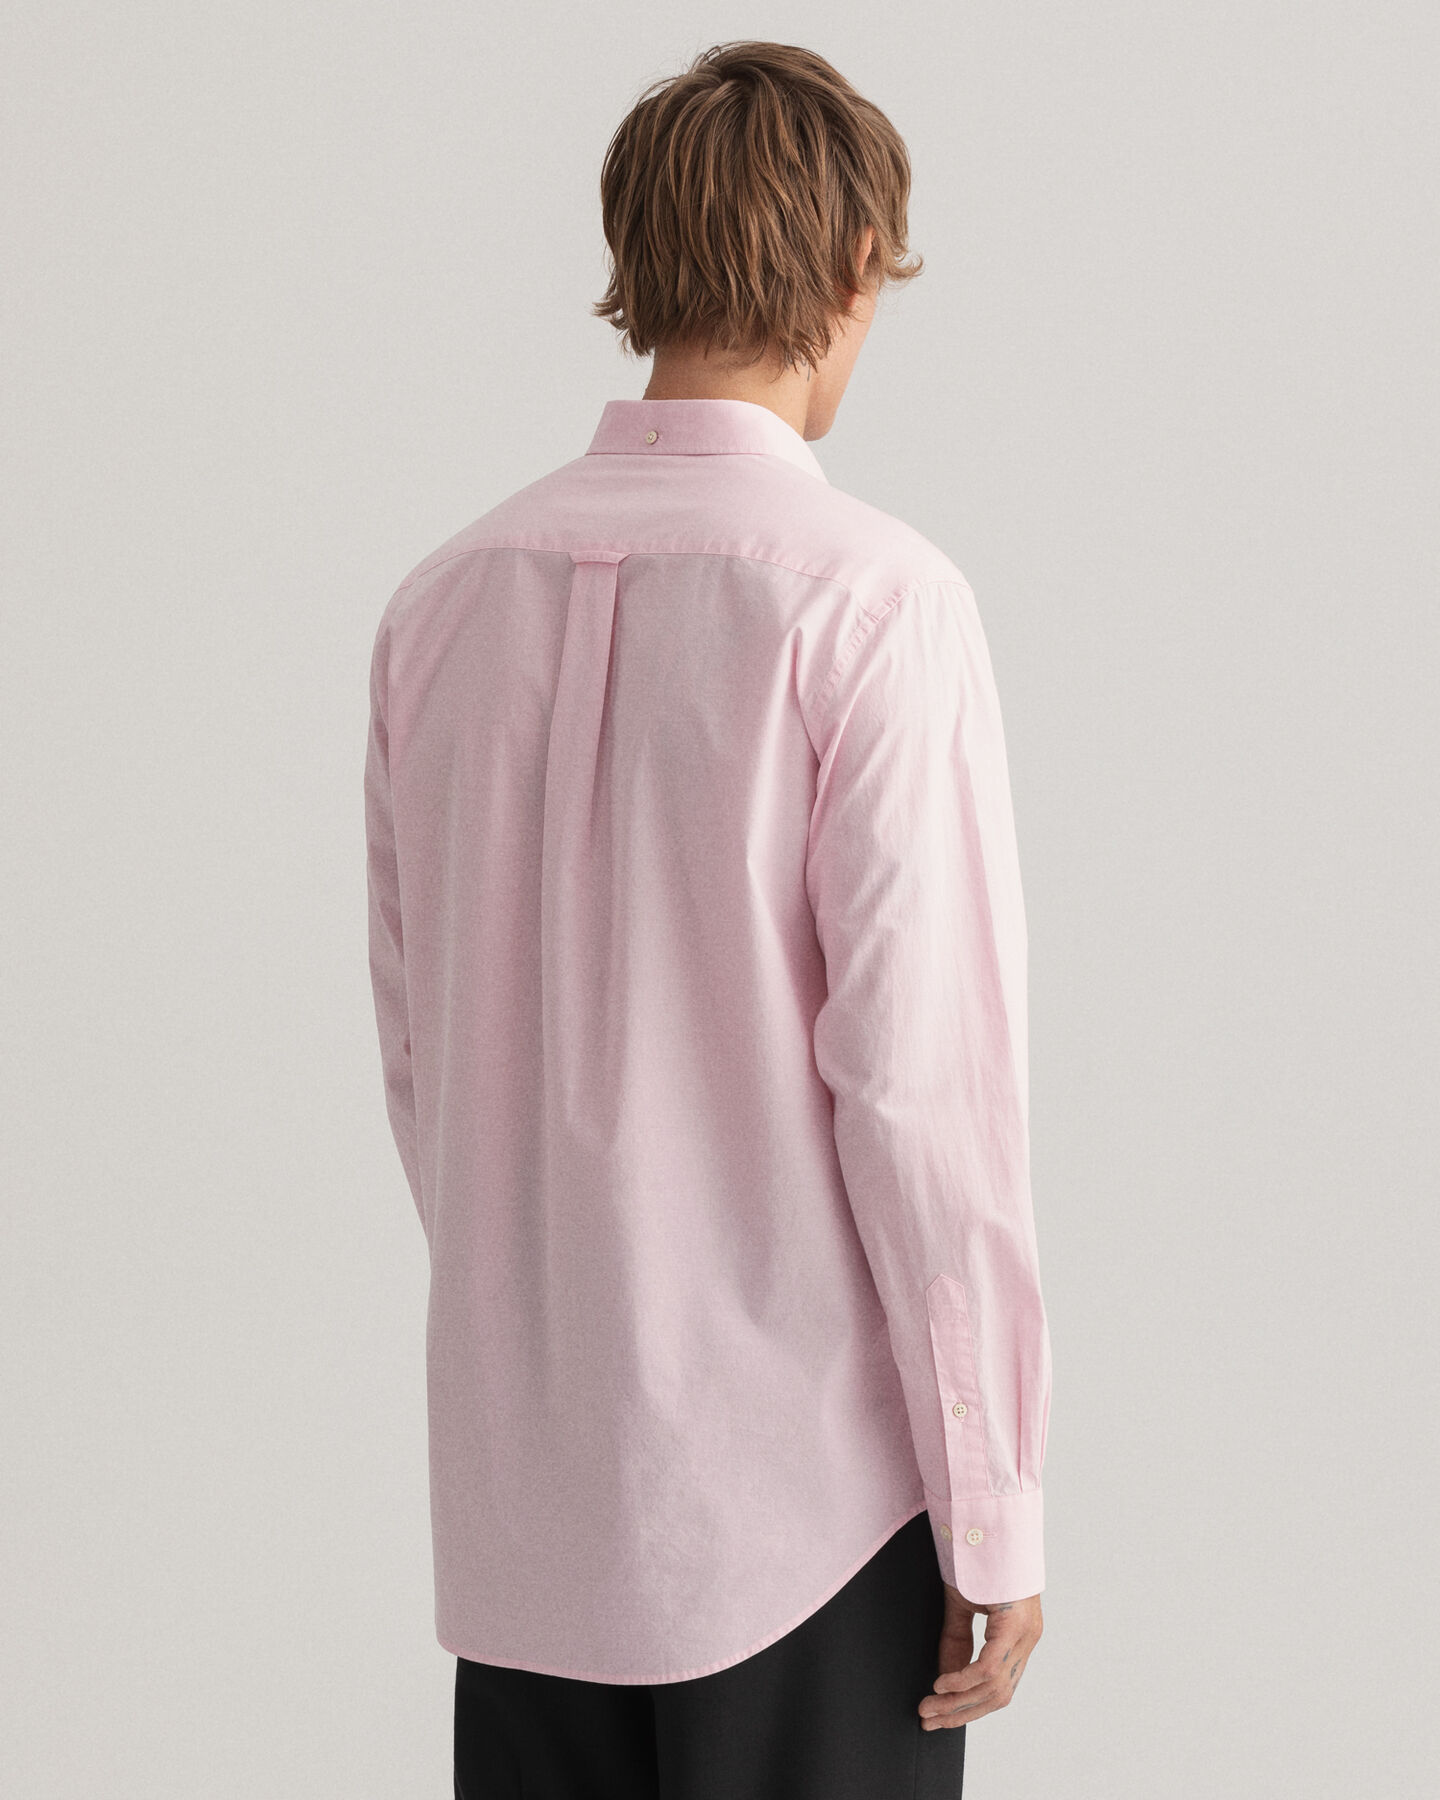 GANT Men's Bright Pink Dobby Stripe Square Fitted Shirt 365677 Size Medium